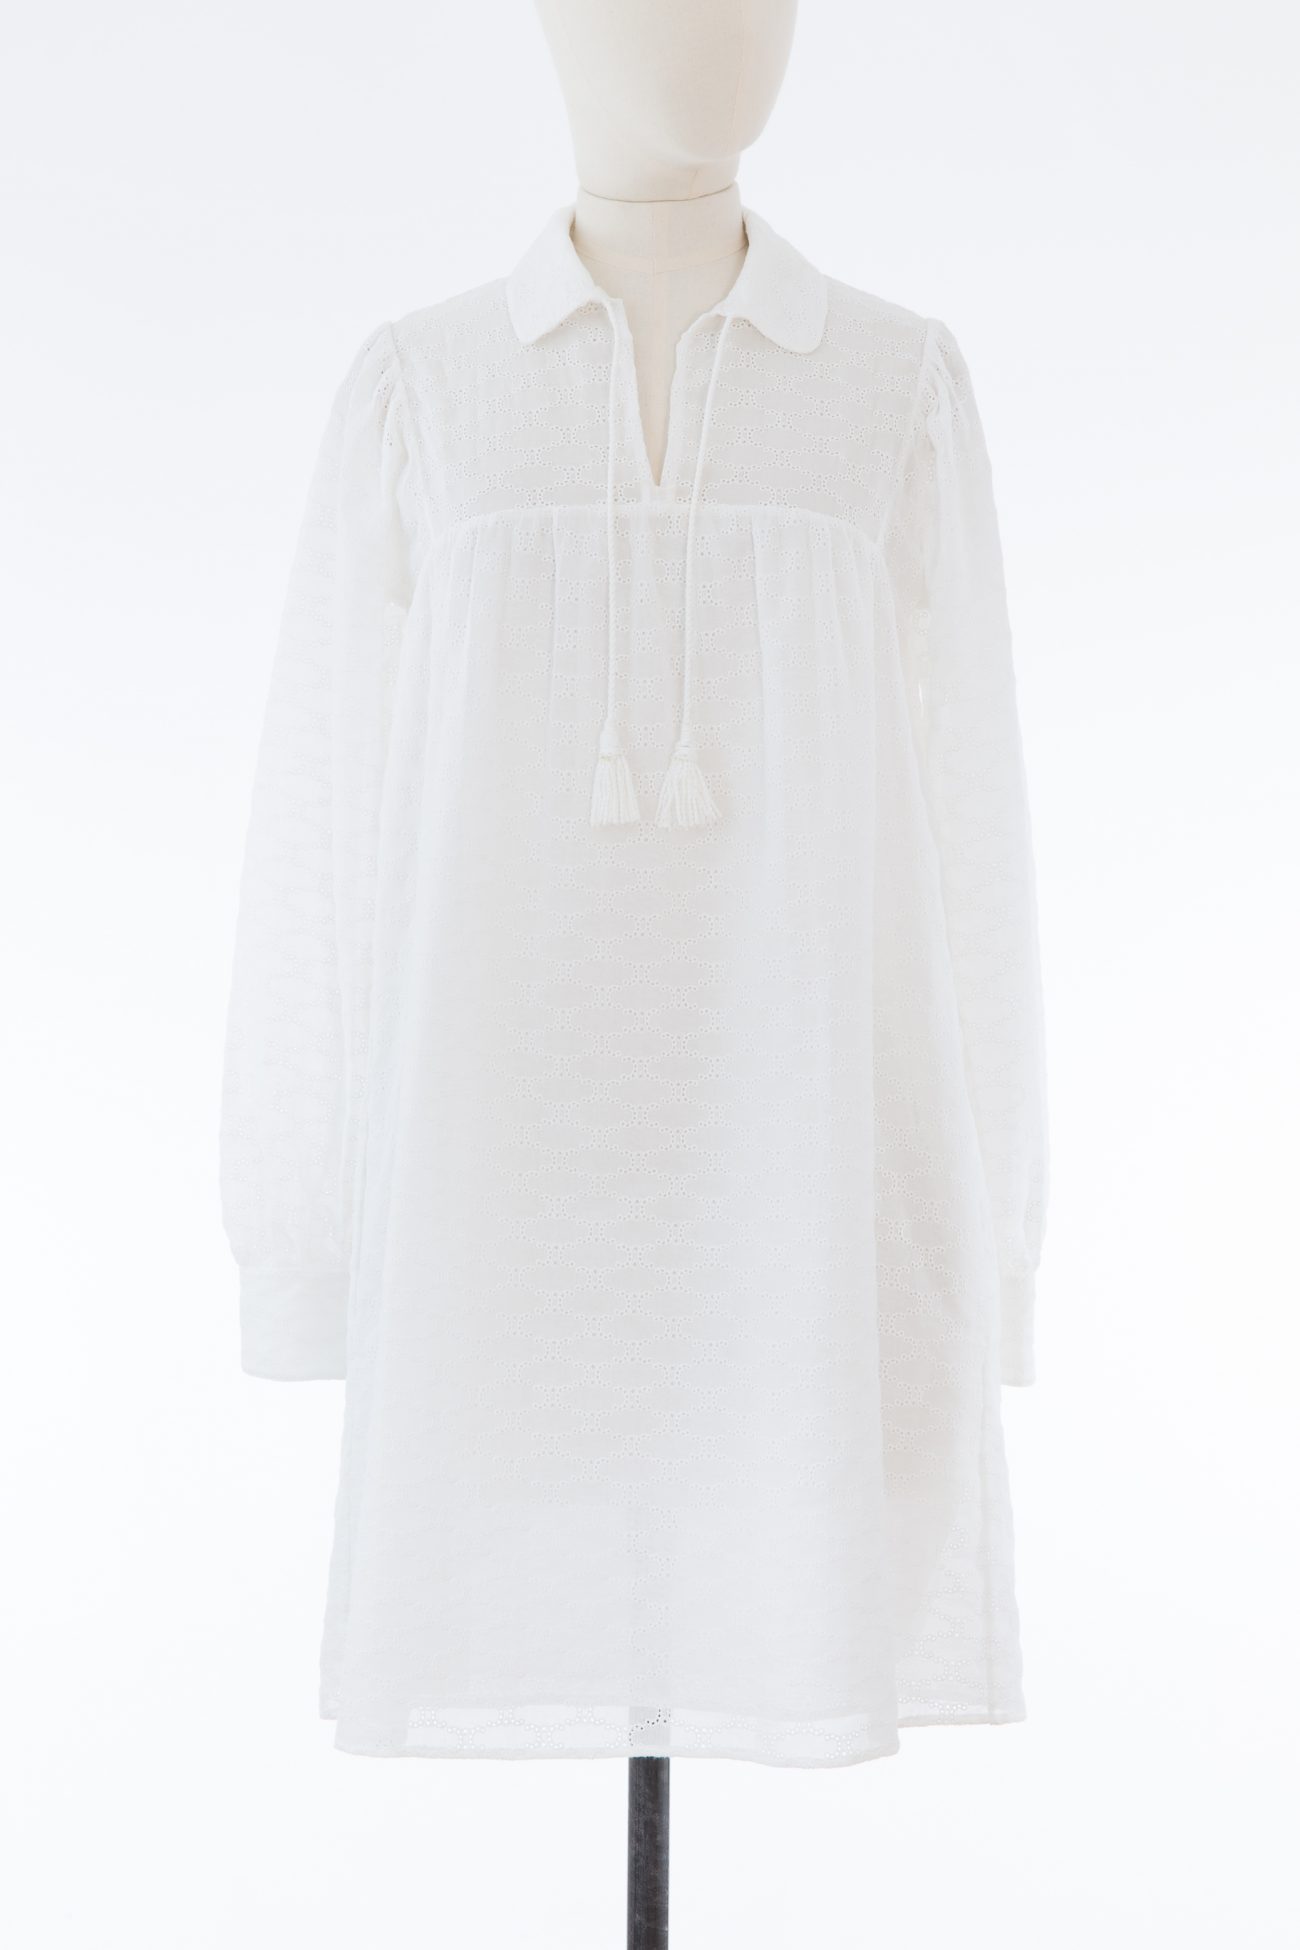 Celine broderie anglaise cotton mini dress